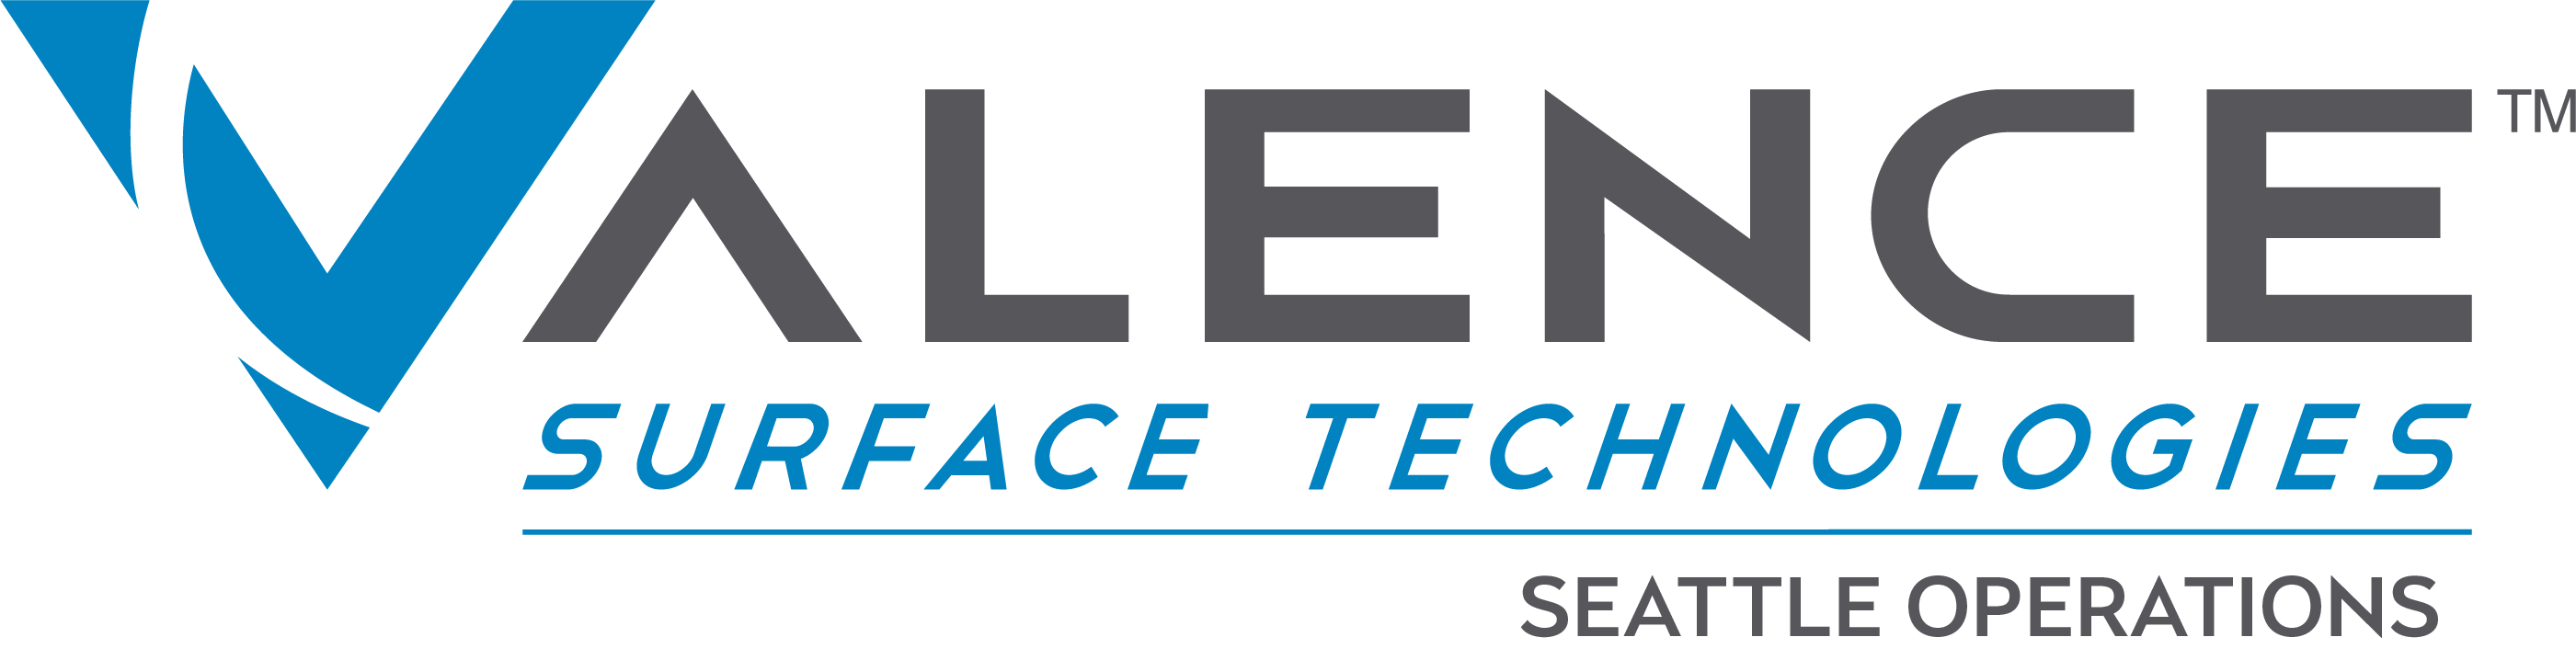 Valence Surface Technologies Seattle logo